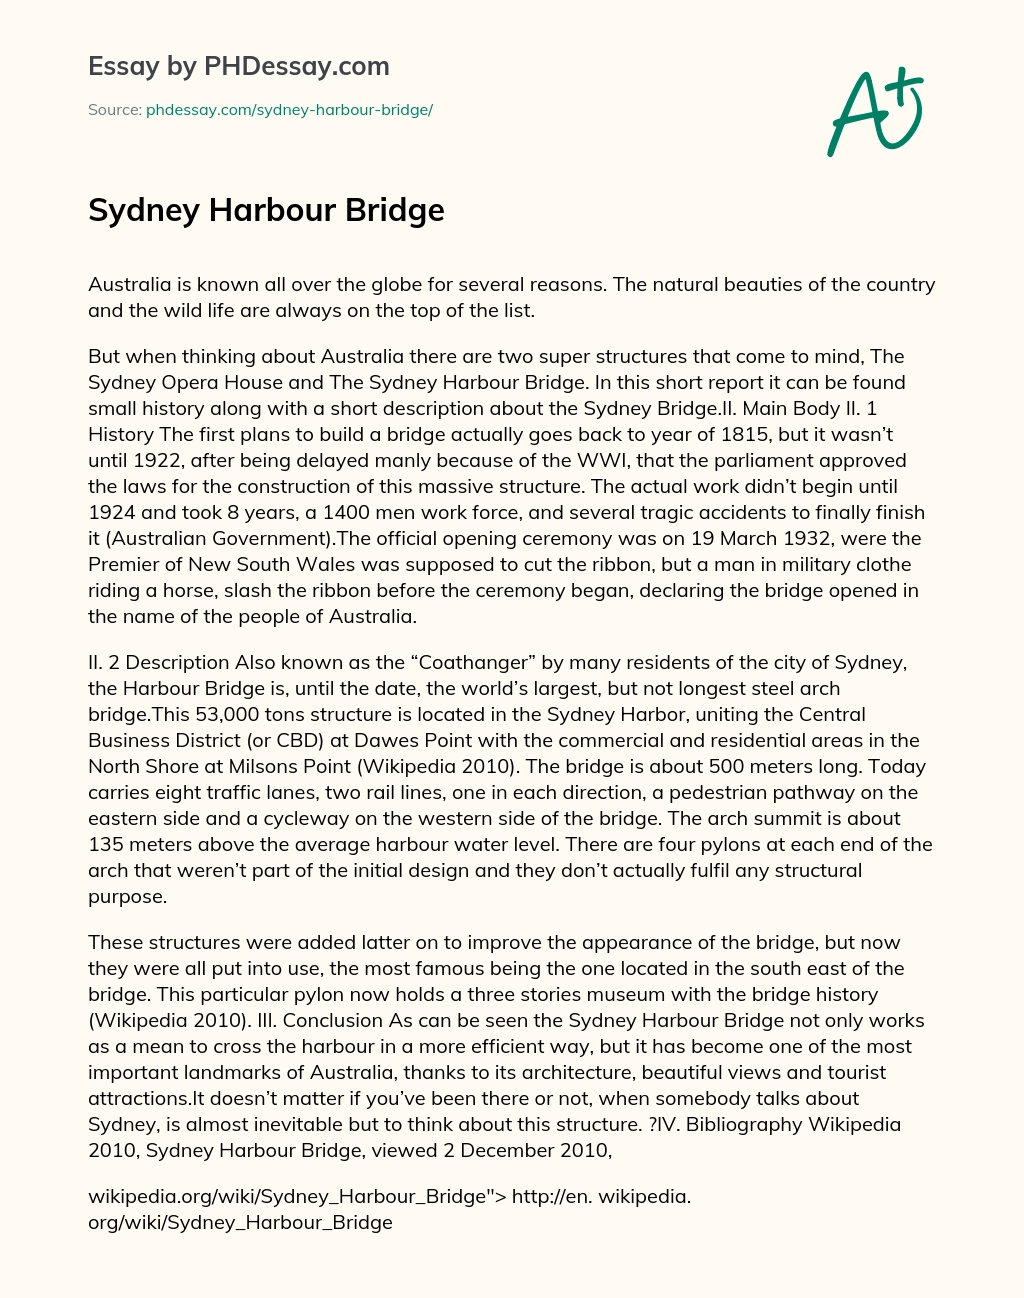 Sydney Harbour Bridge essay